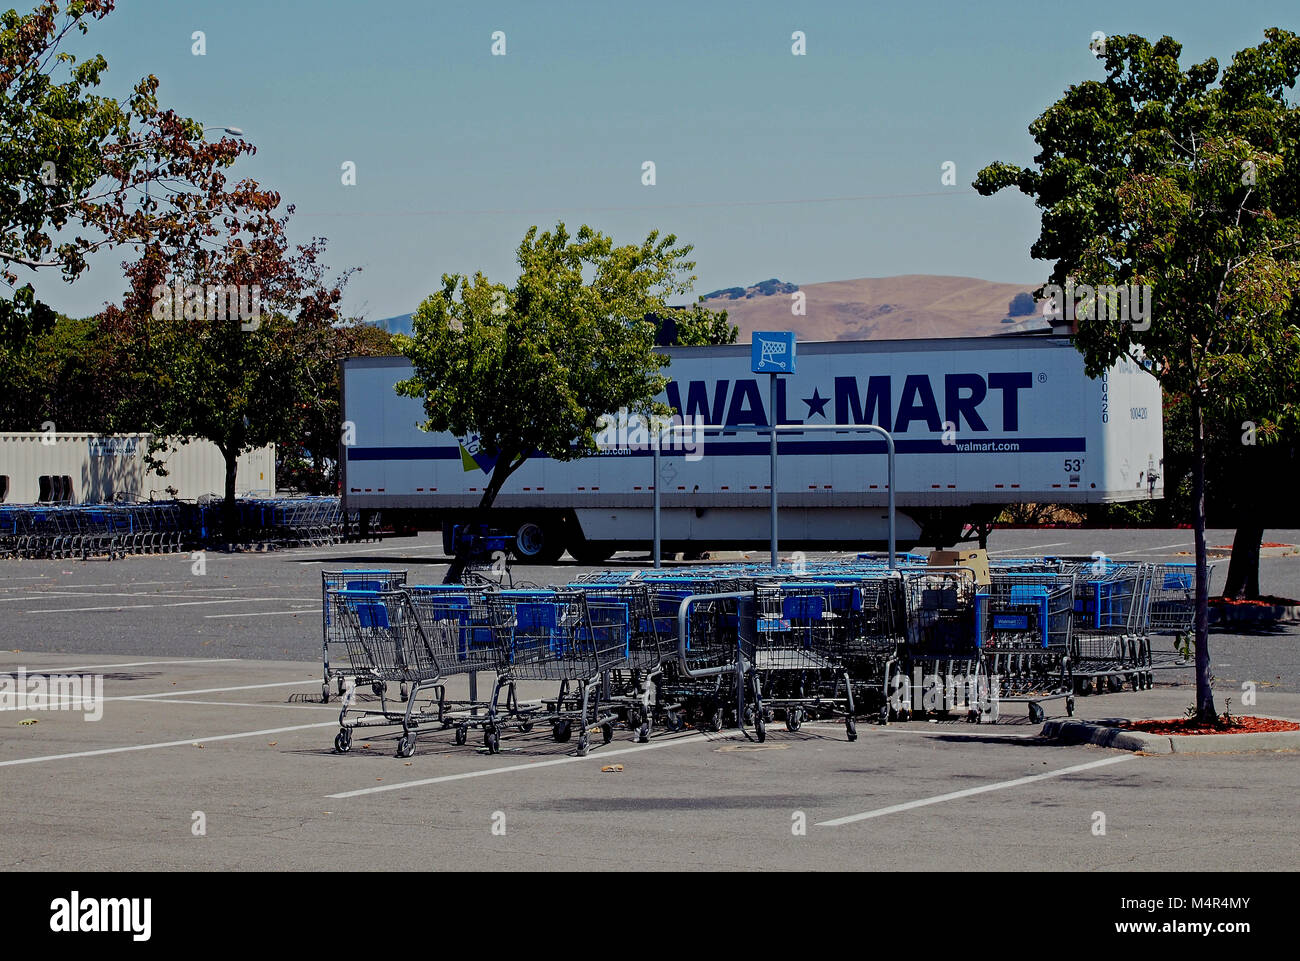 Walmart store trailer and carts, Union City, California Stock Photo